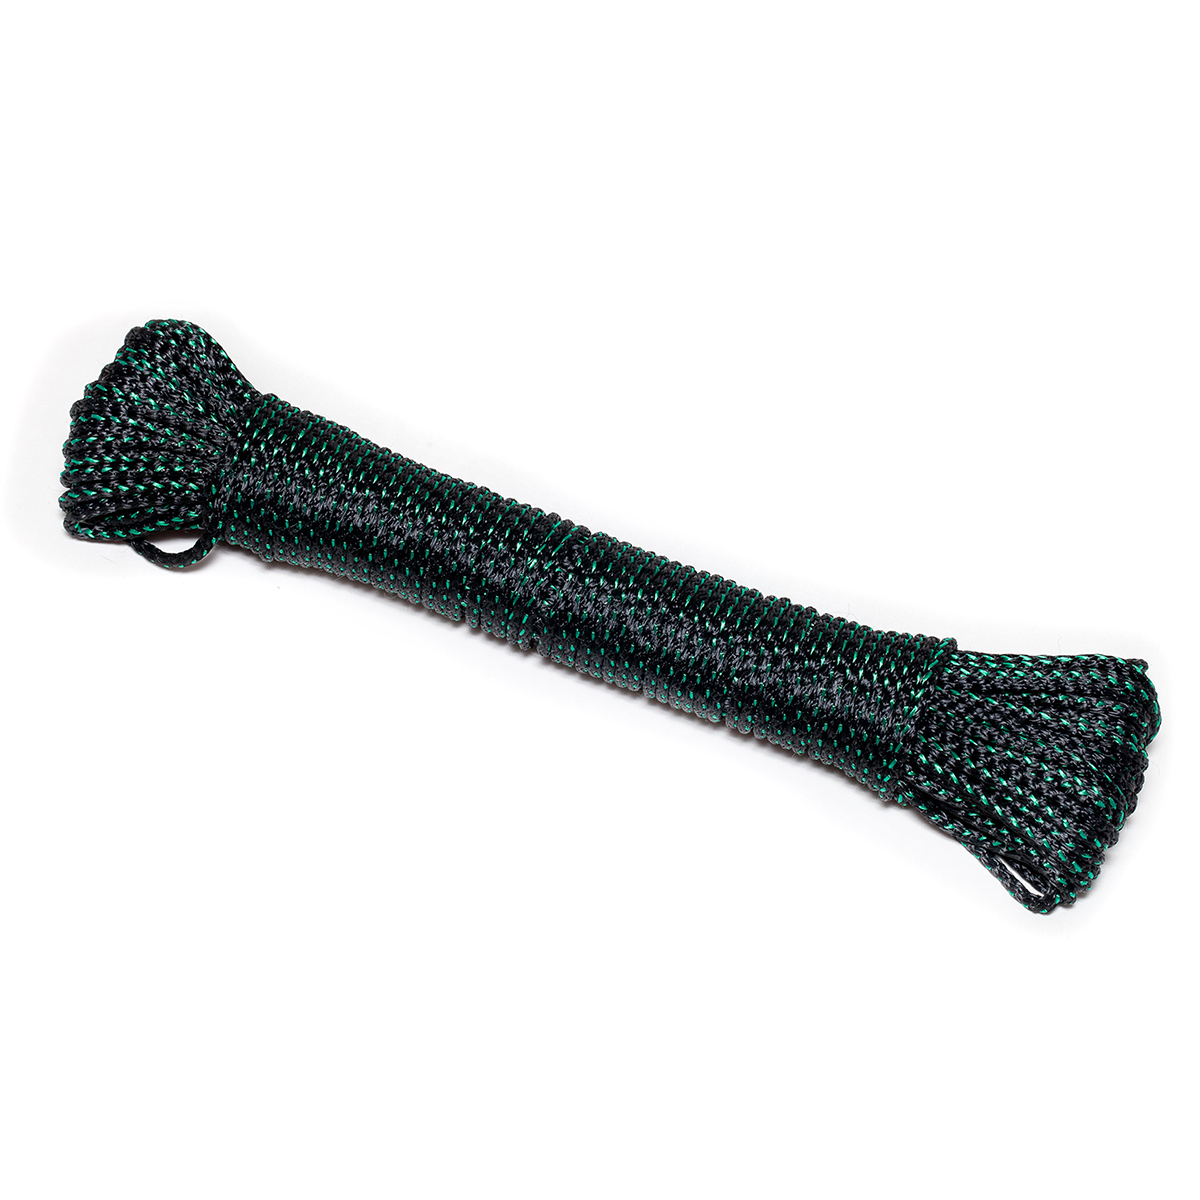 Шнур утяжеляющий Петроканат, 31 м, черно-зеленый, вес 22 г/м шнур для вязания 100% полиэфир ширина 3 мм 100м джинс